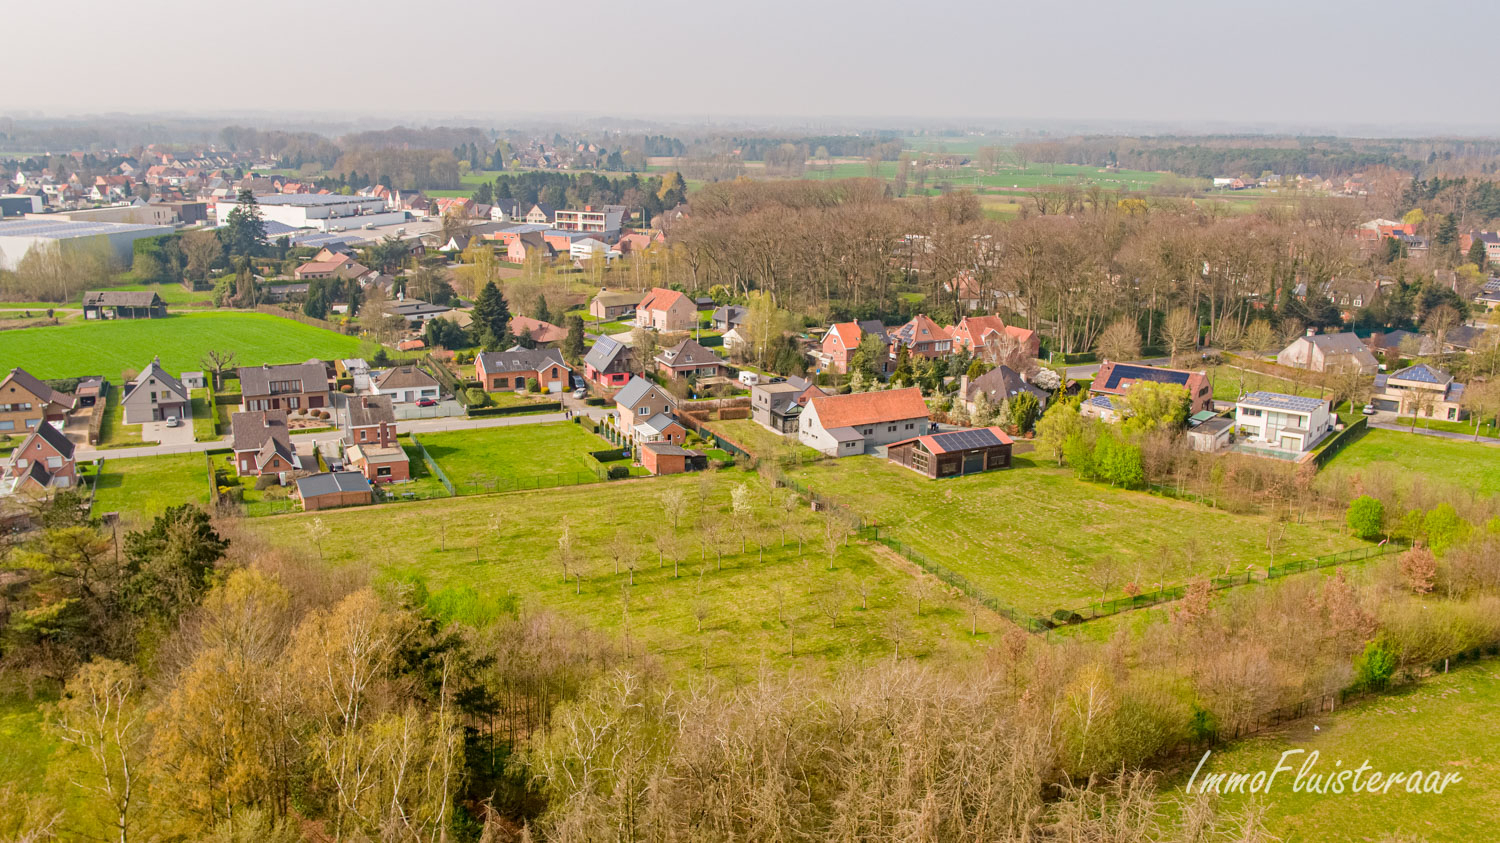 Property sold in Belsele